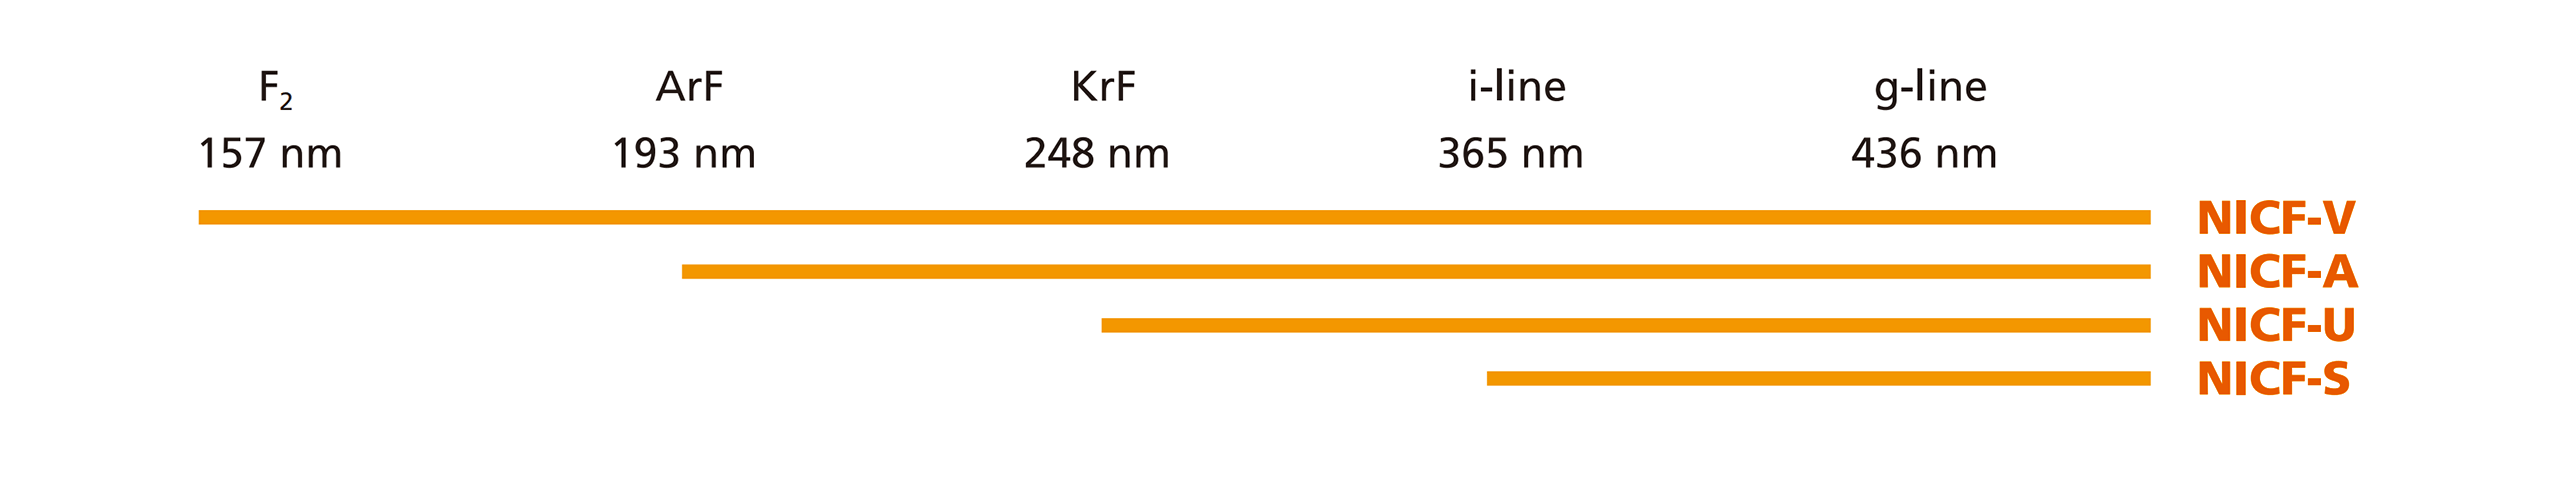 The transmittance range for NICF-V is up to F2 (157 nm). The transmittance range for NICF-A is up to ArF (193 nm). The transmittance range for NICF-U is up to KrF (248 nm). The transmittance range for NICF-S is the i-line (365 nm) or visible light.